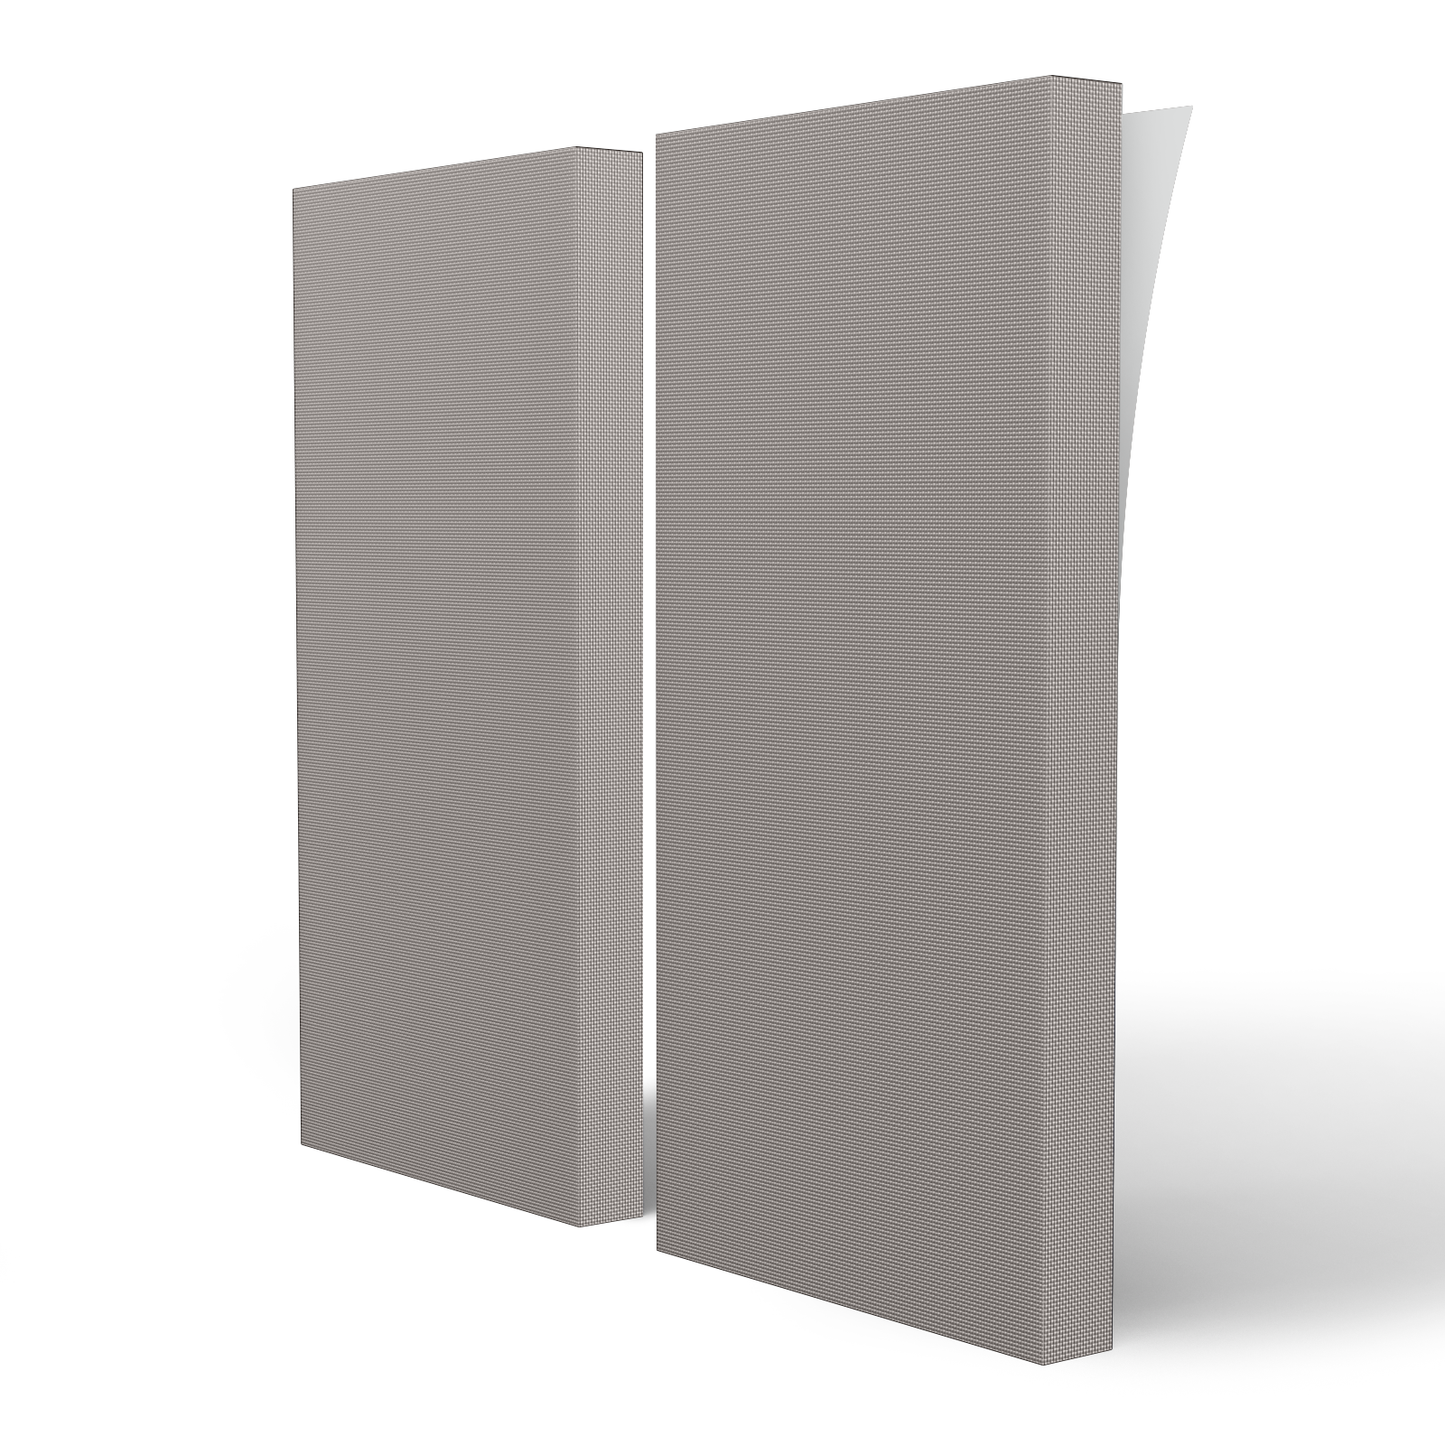 Bubos Glass Fiber Acoustic Wall Panels